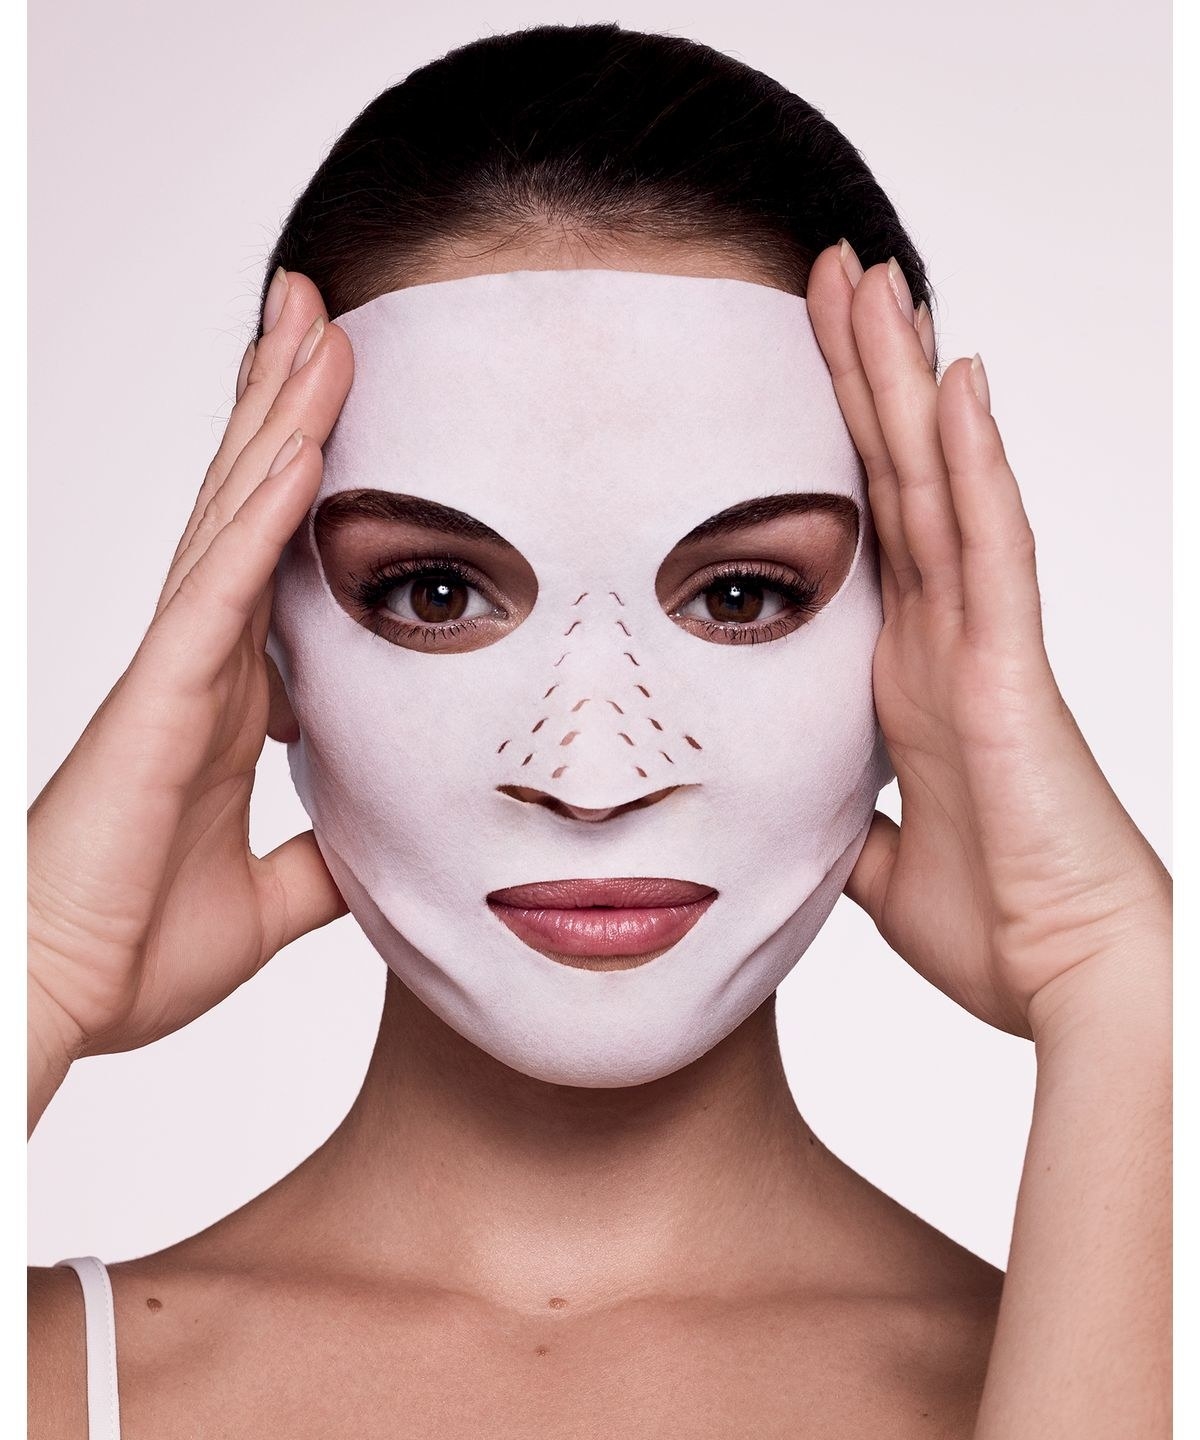 Маска для лица женская. Маска для лица. М̆̈ӑ̈с̆̈к̆̈й̈ д̆̈л̆̈я̆̈ л̆̈й̈ц̆̈ӑ̈. Женщина в маске для лица. Тканевые маски для лица.